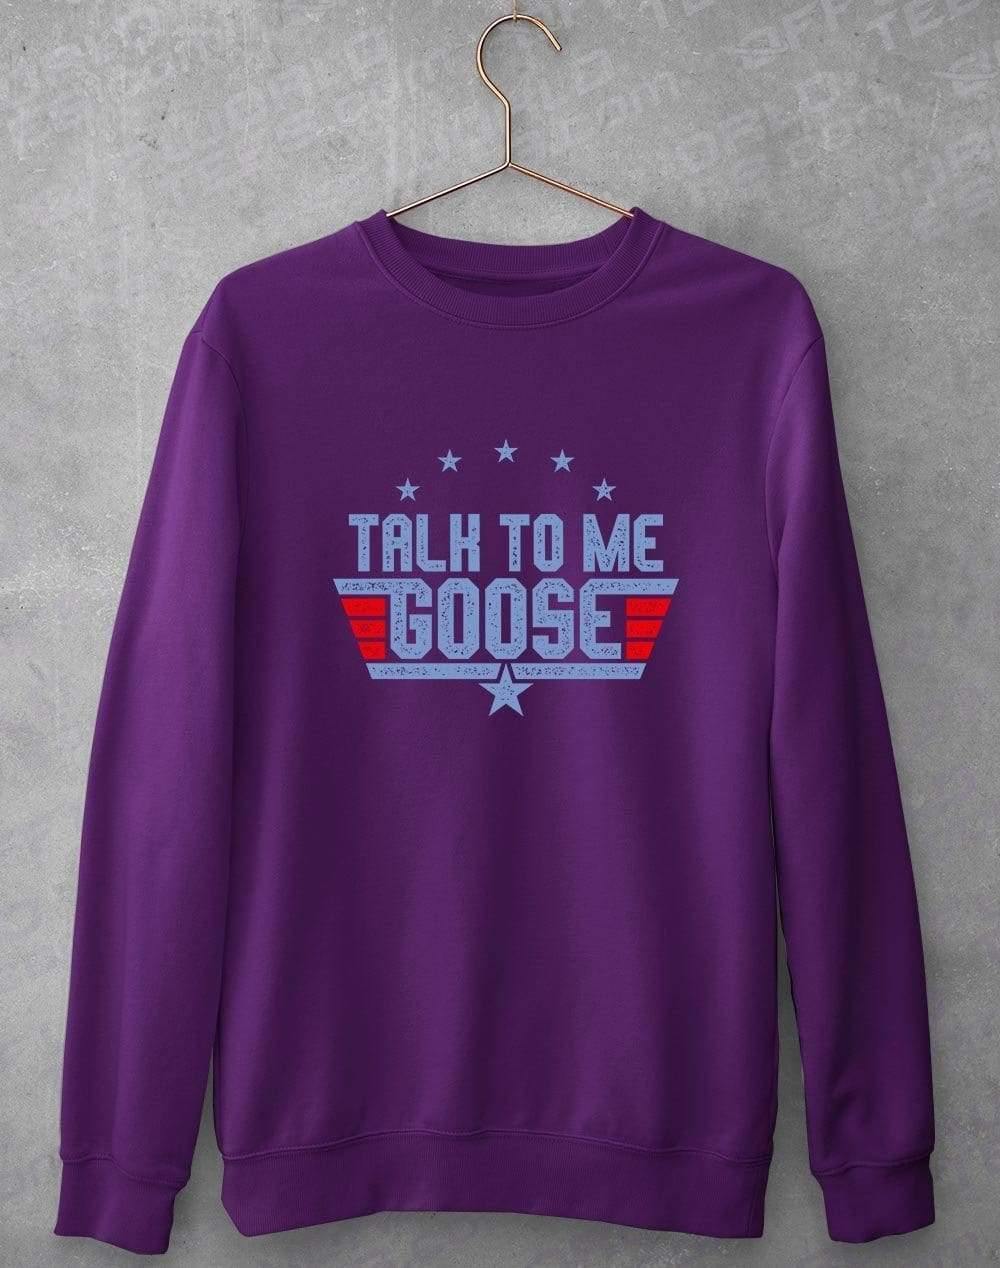 Talk to me Goose Sweatshirt S / Purple  - Off World Tees